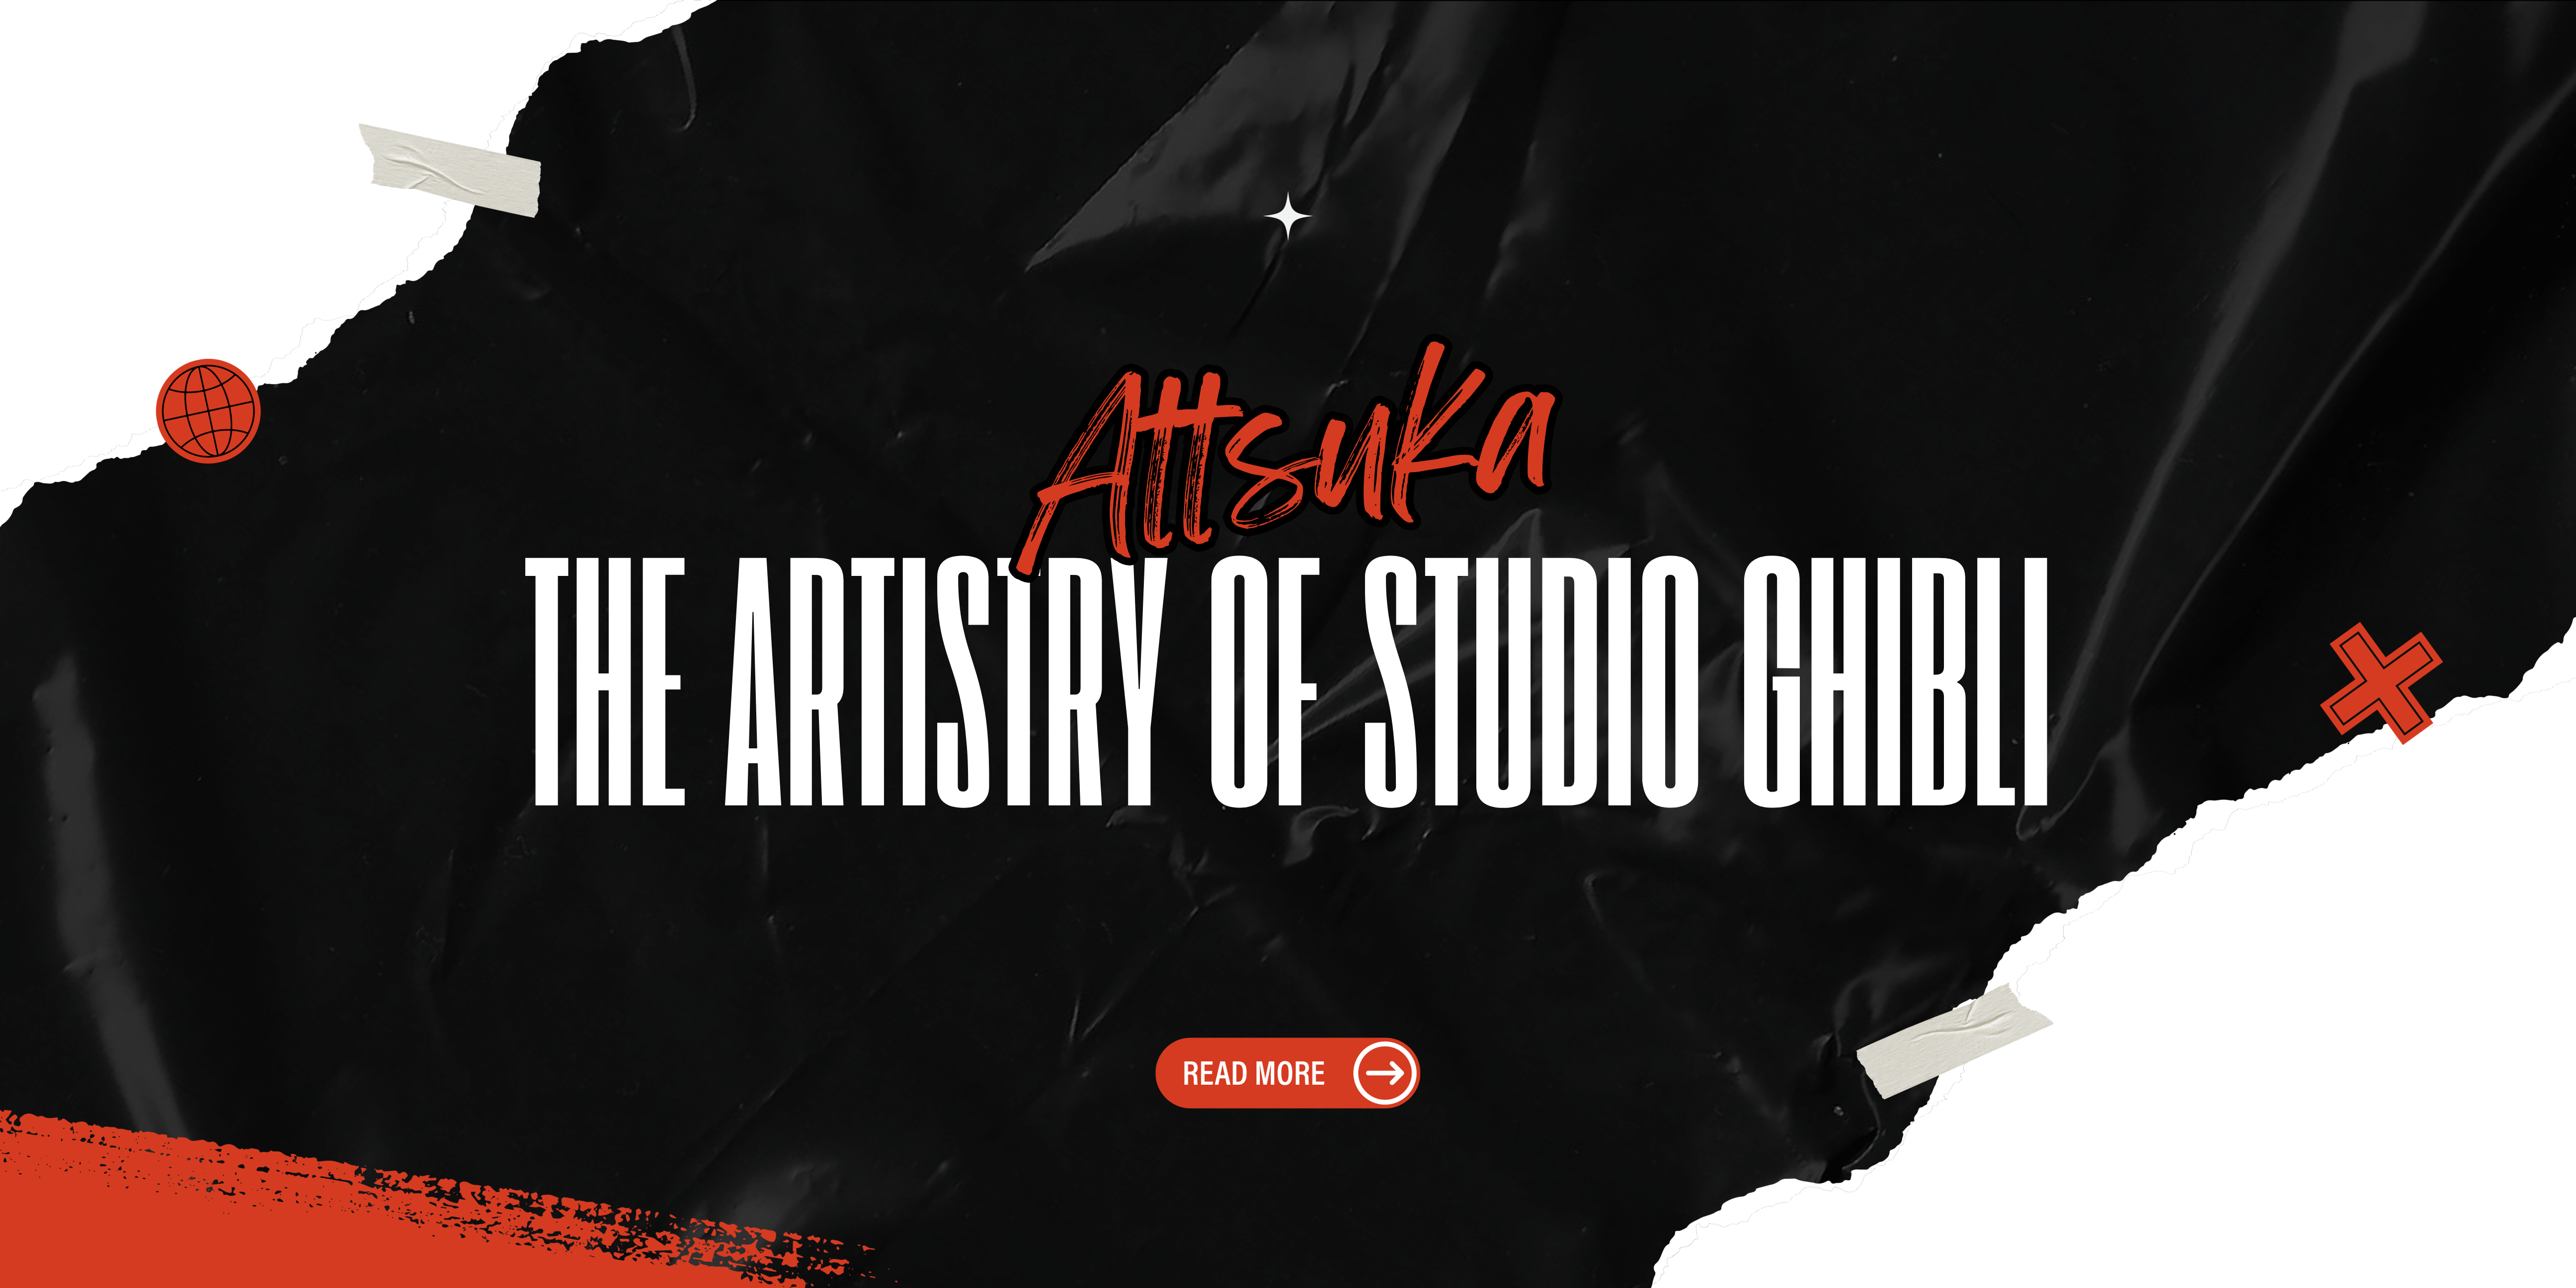 The Artistry of Studio Ghibli